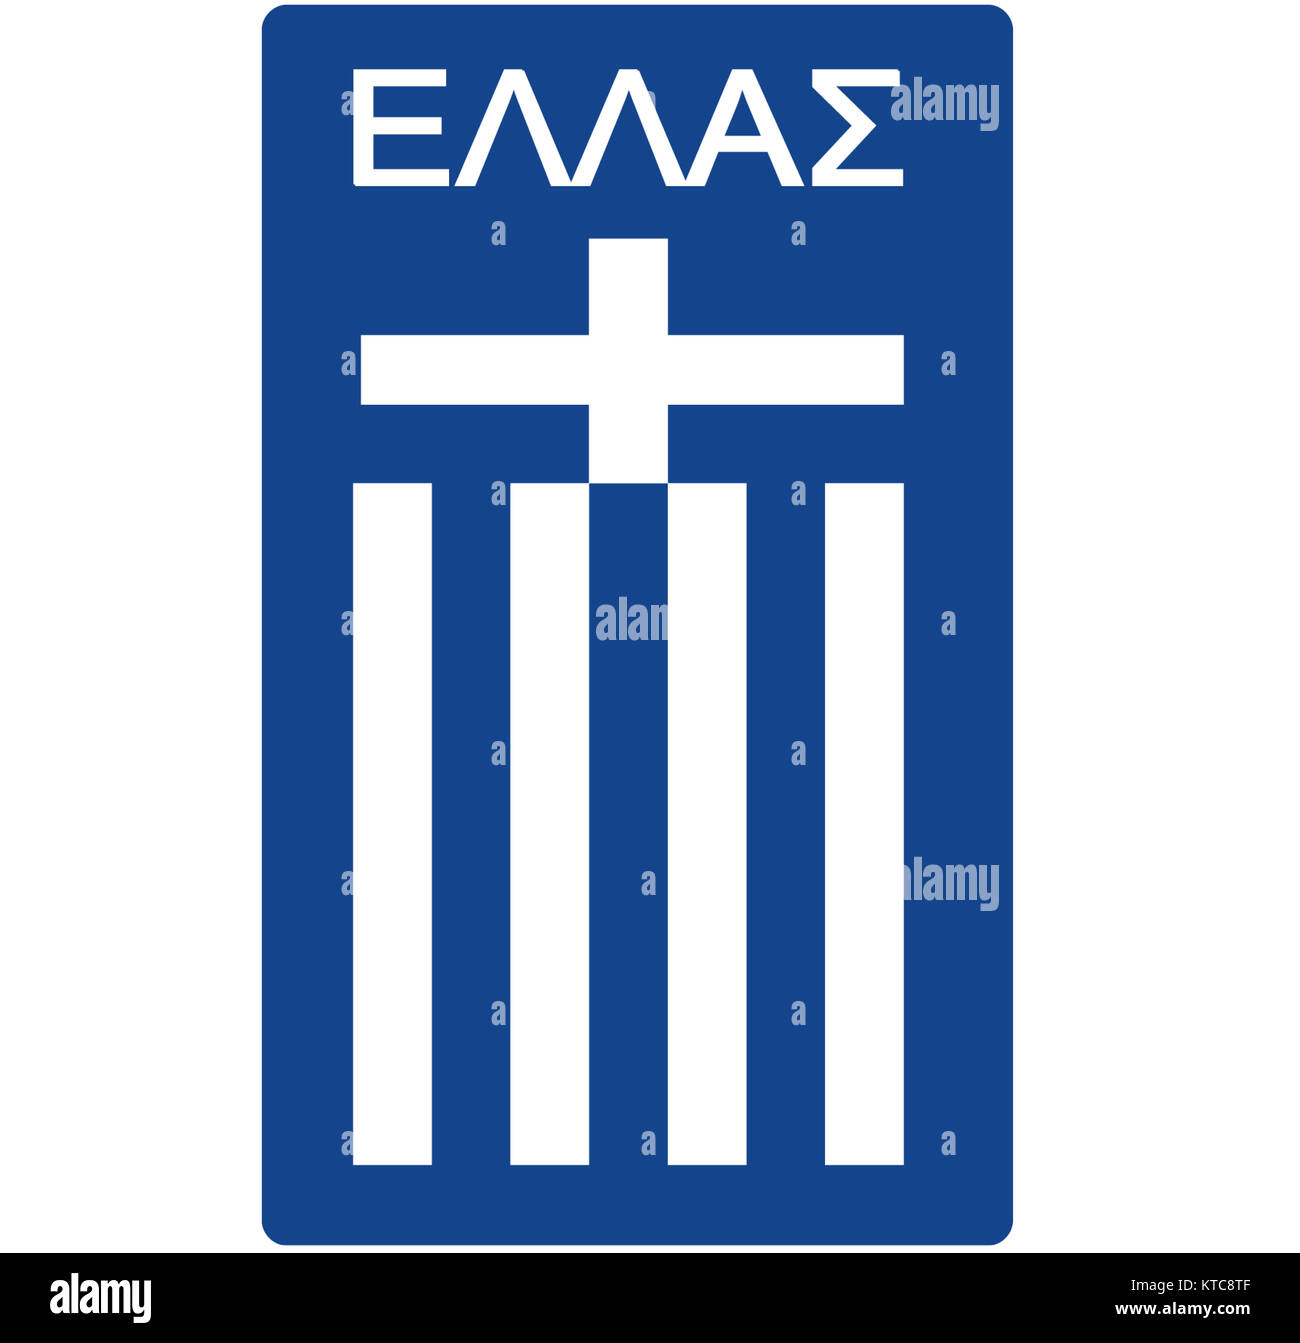 Grecia national football team logo Foto Stock